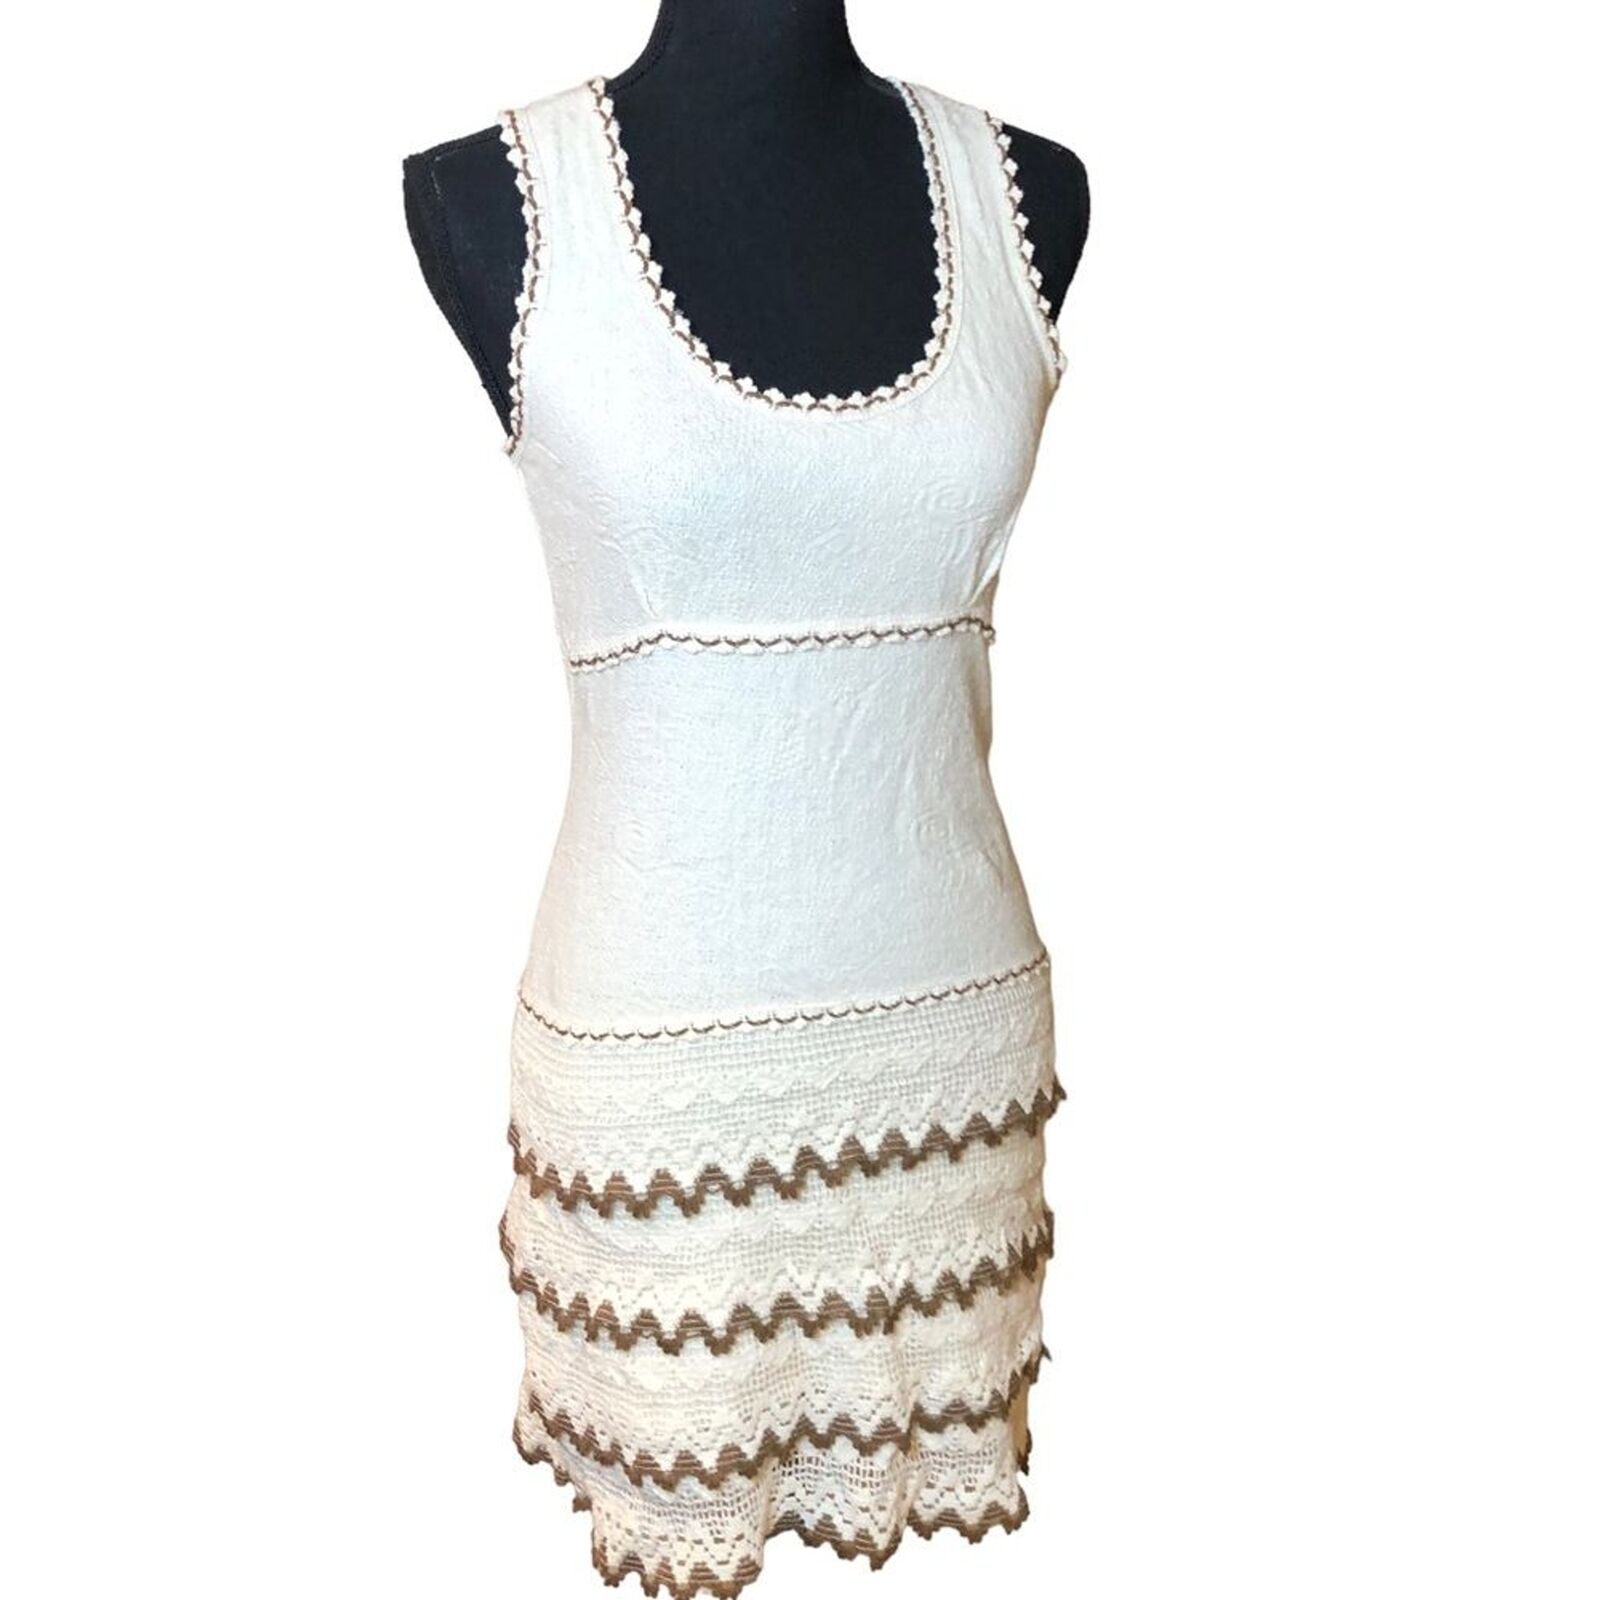 Vintage Peru Farella Peruvian Cotton Crochet Knit Summer Dress SZ M